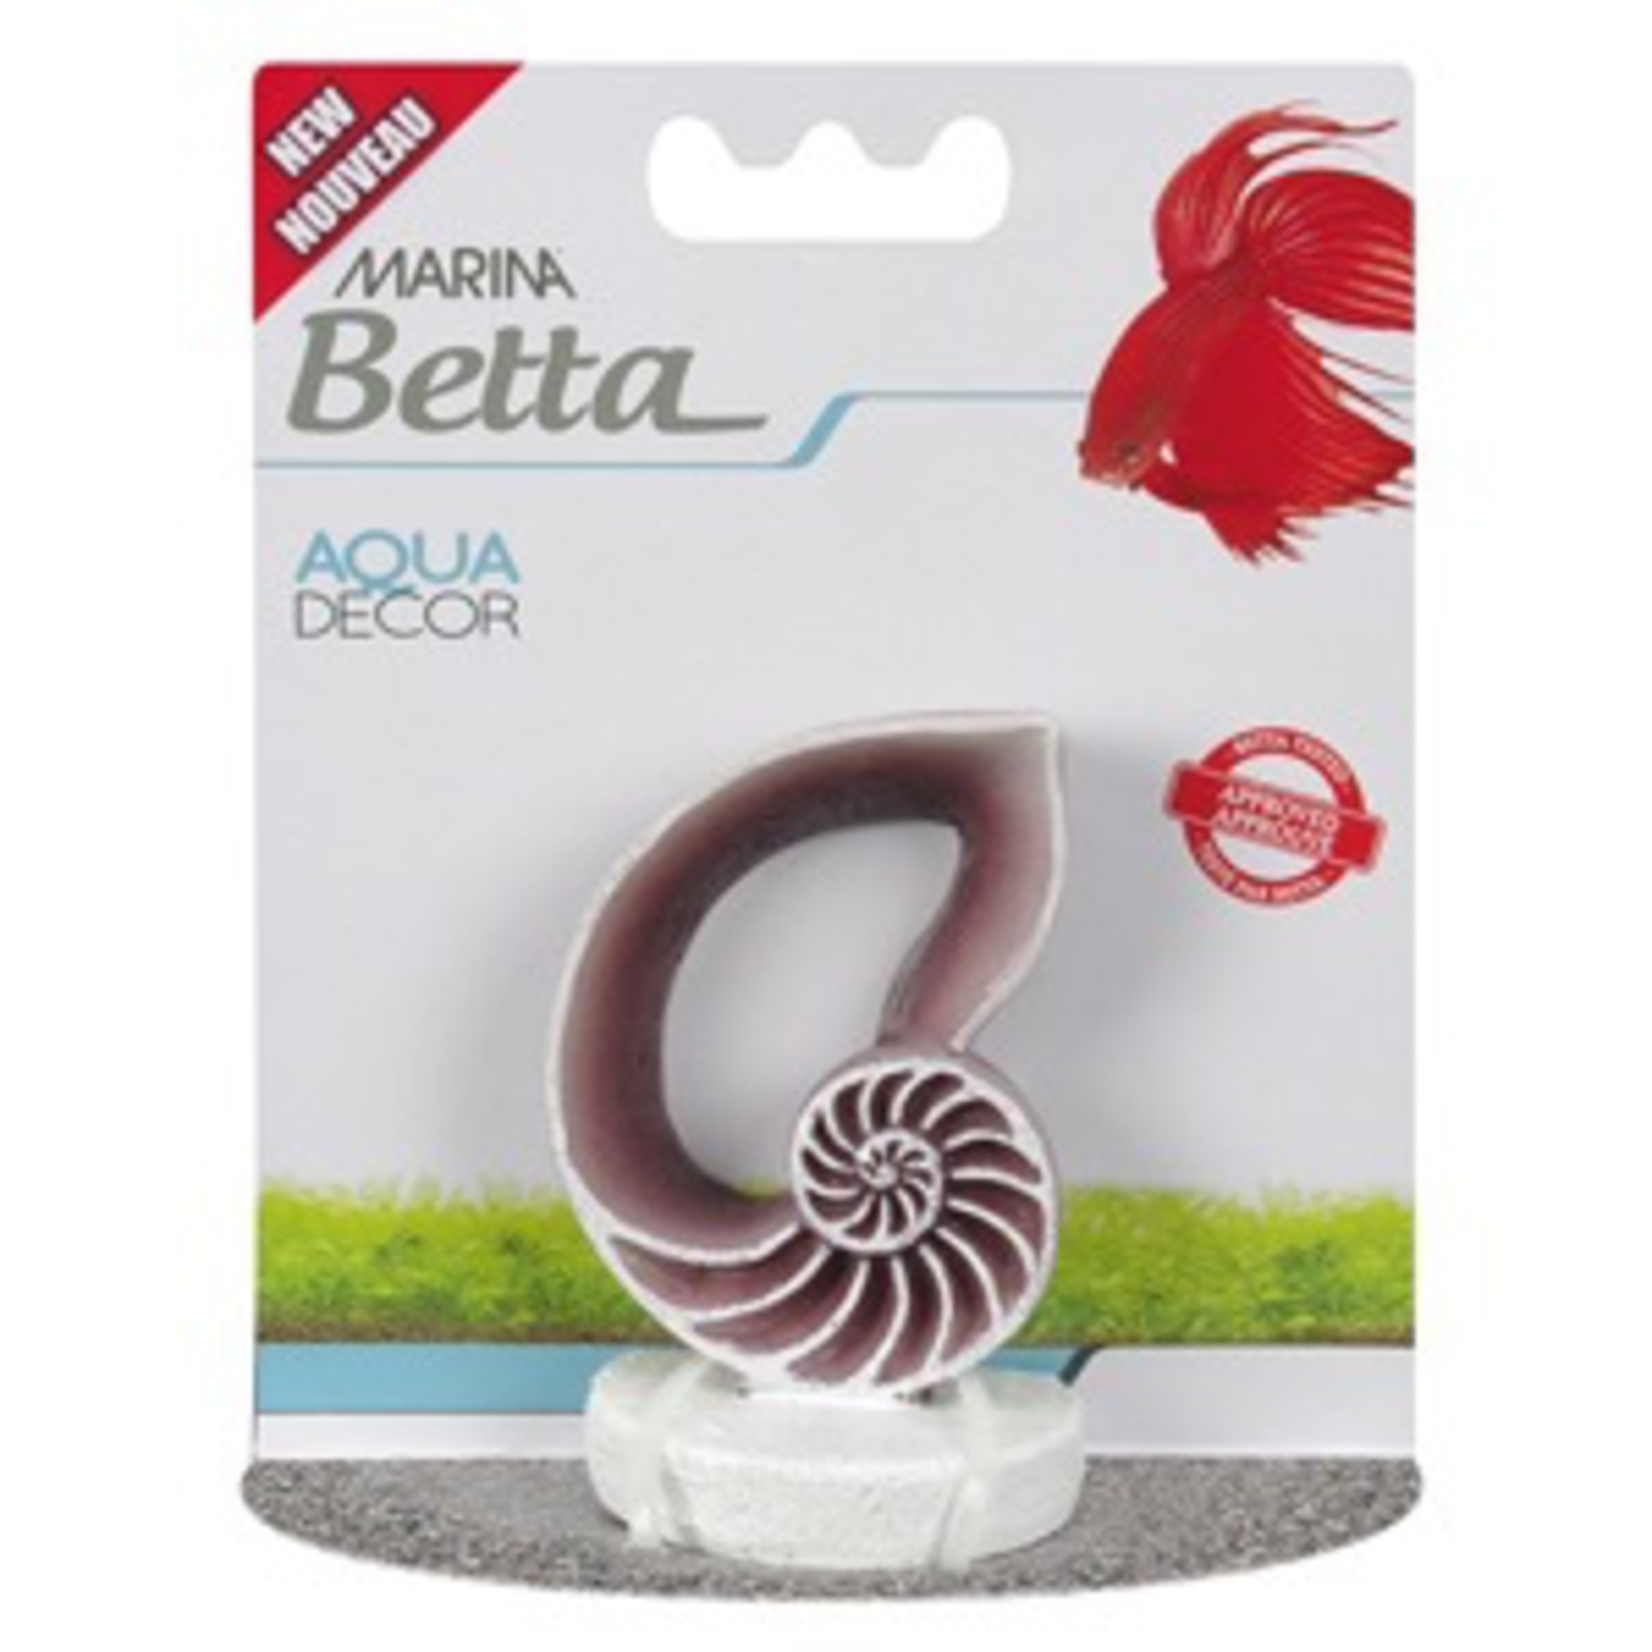 MARINA (W) Marina Betta Aqua Decor Ornaments - Sea Shell